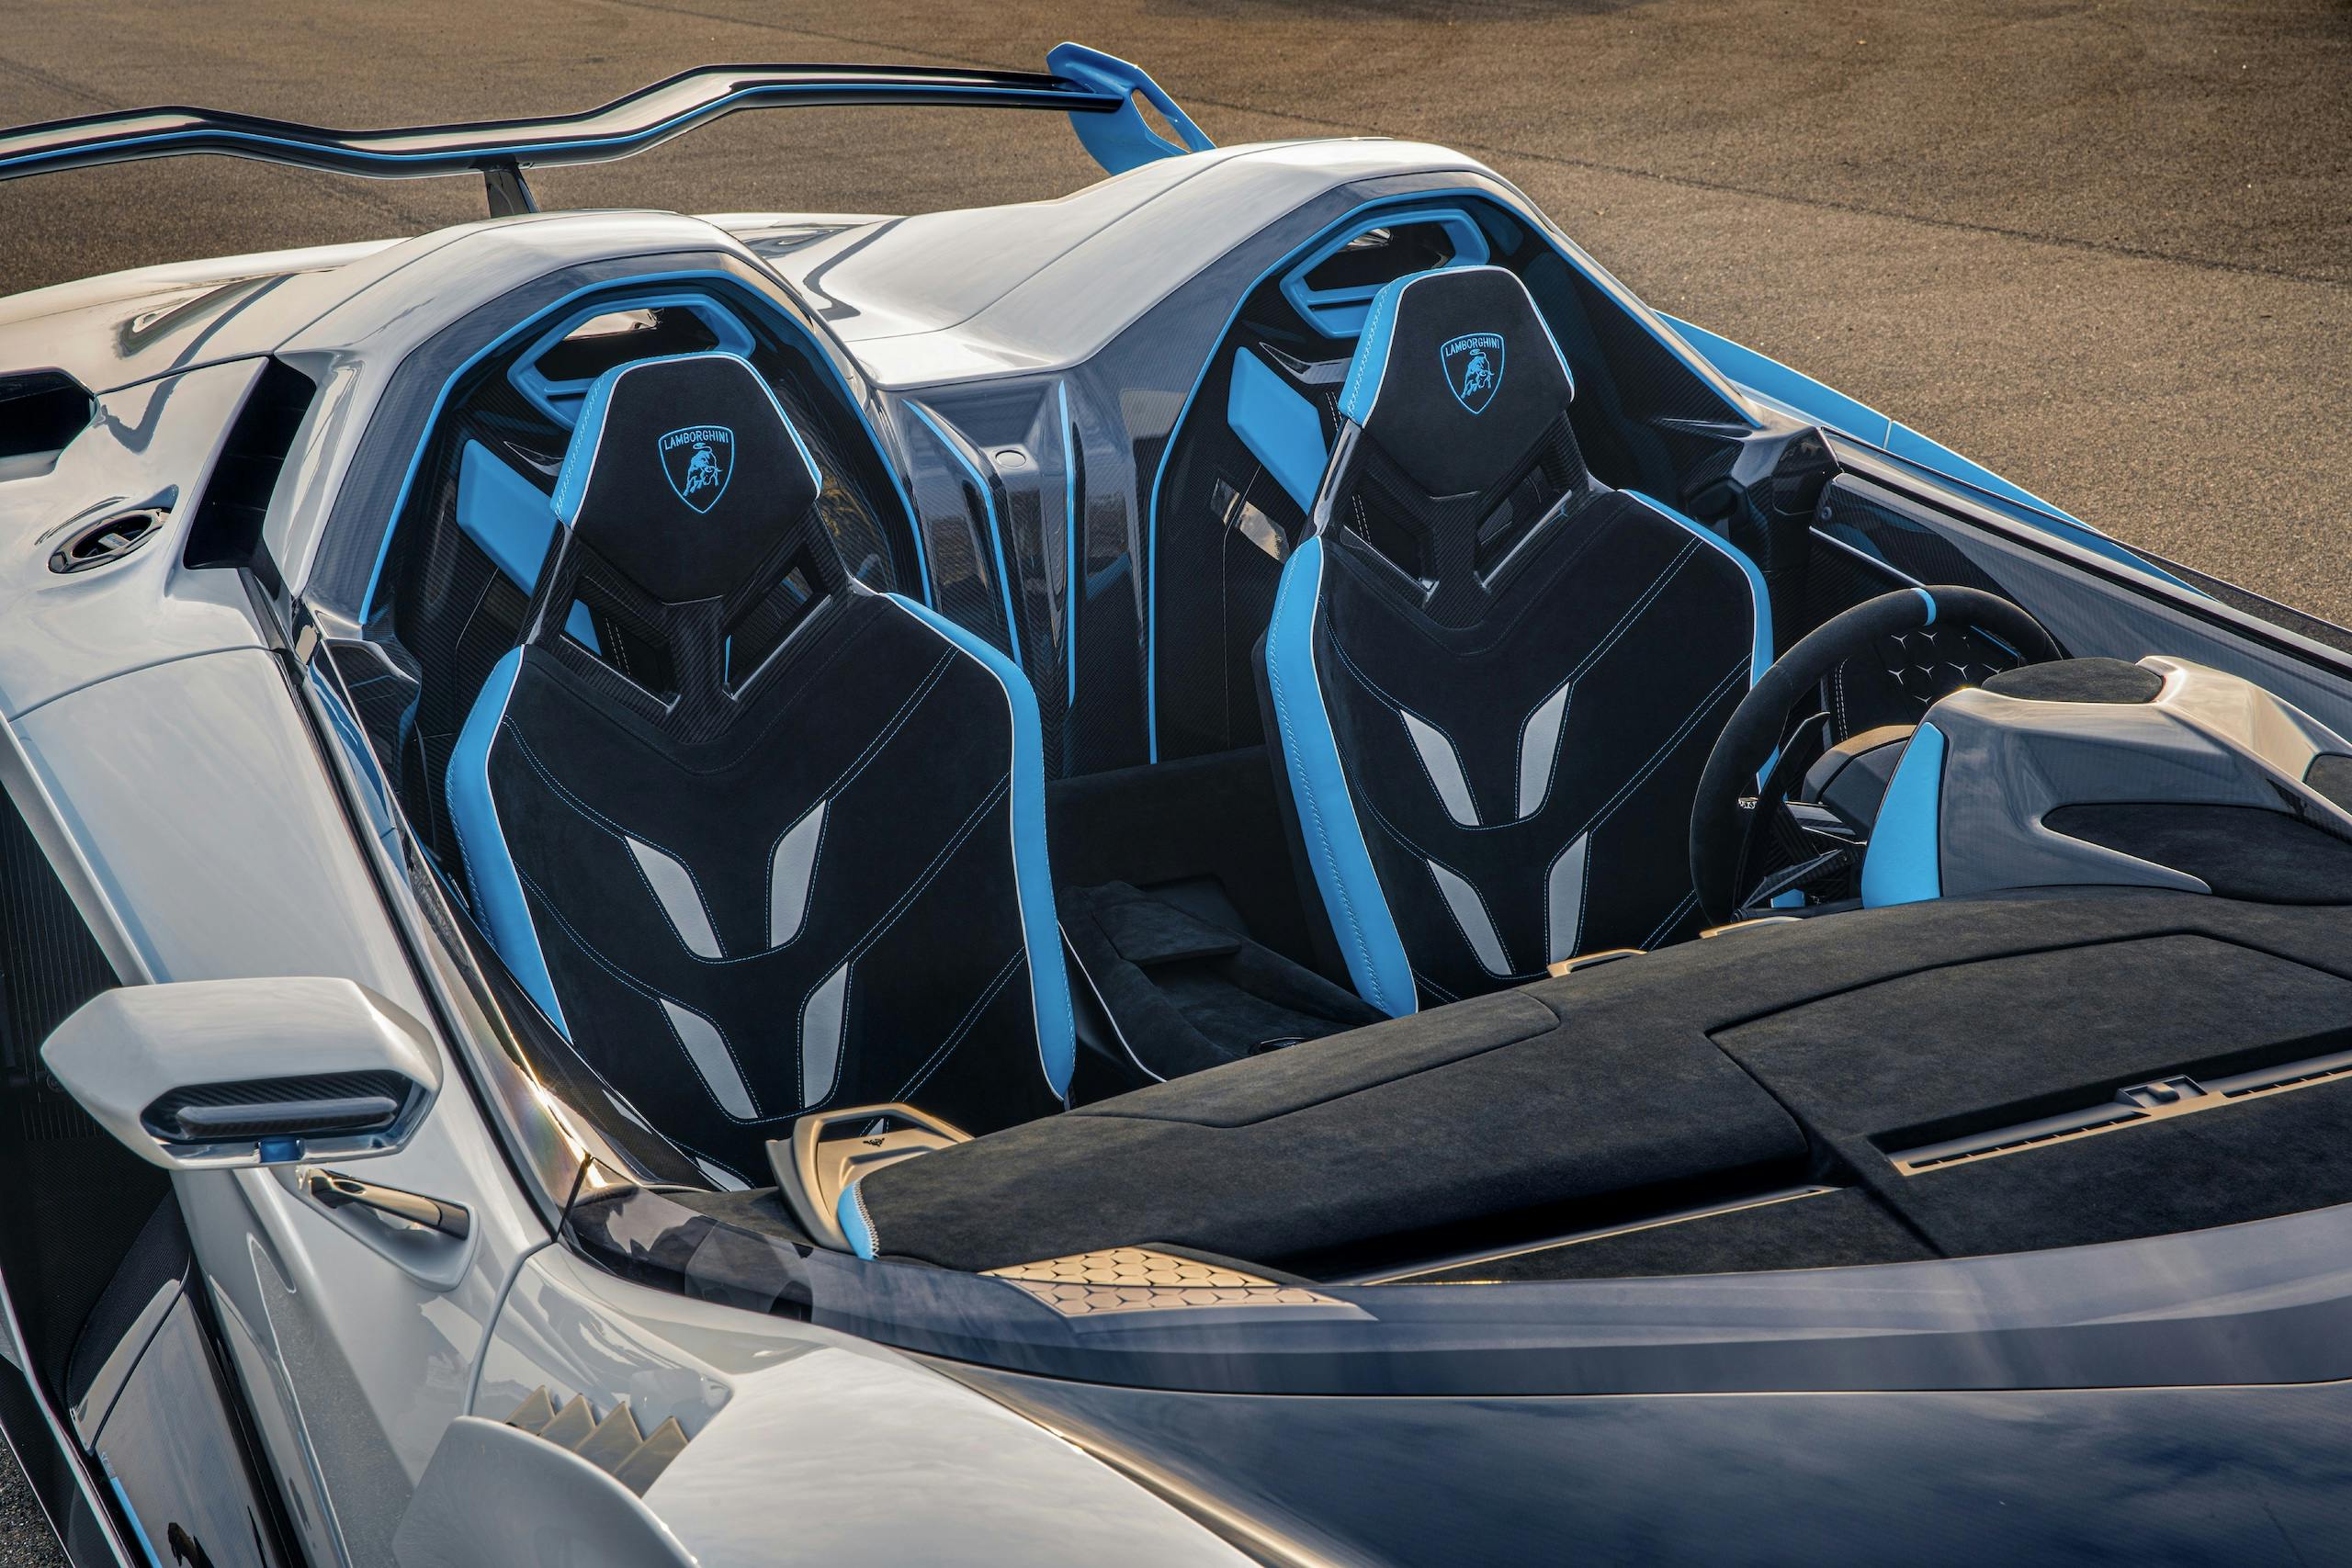 Lamborghini SC20 seat accents